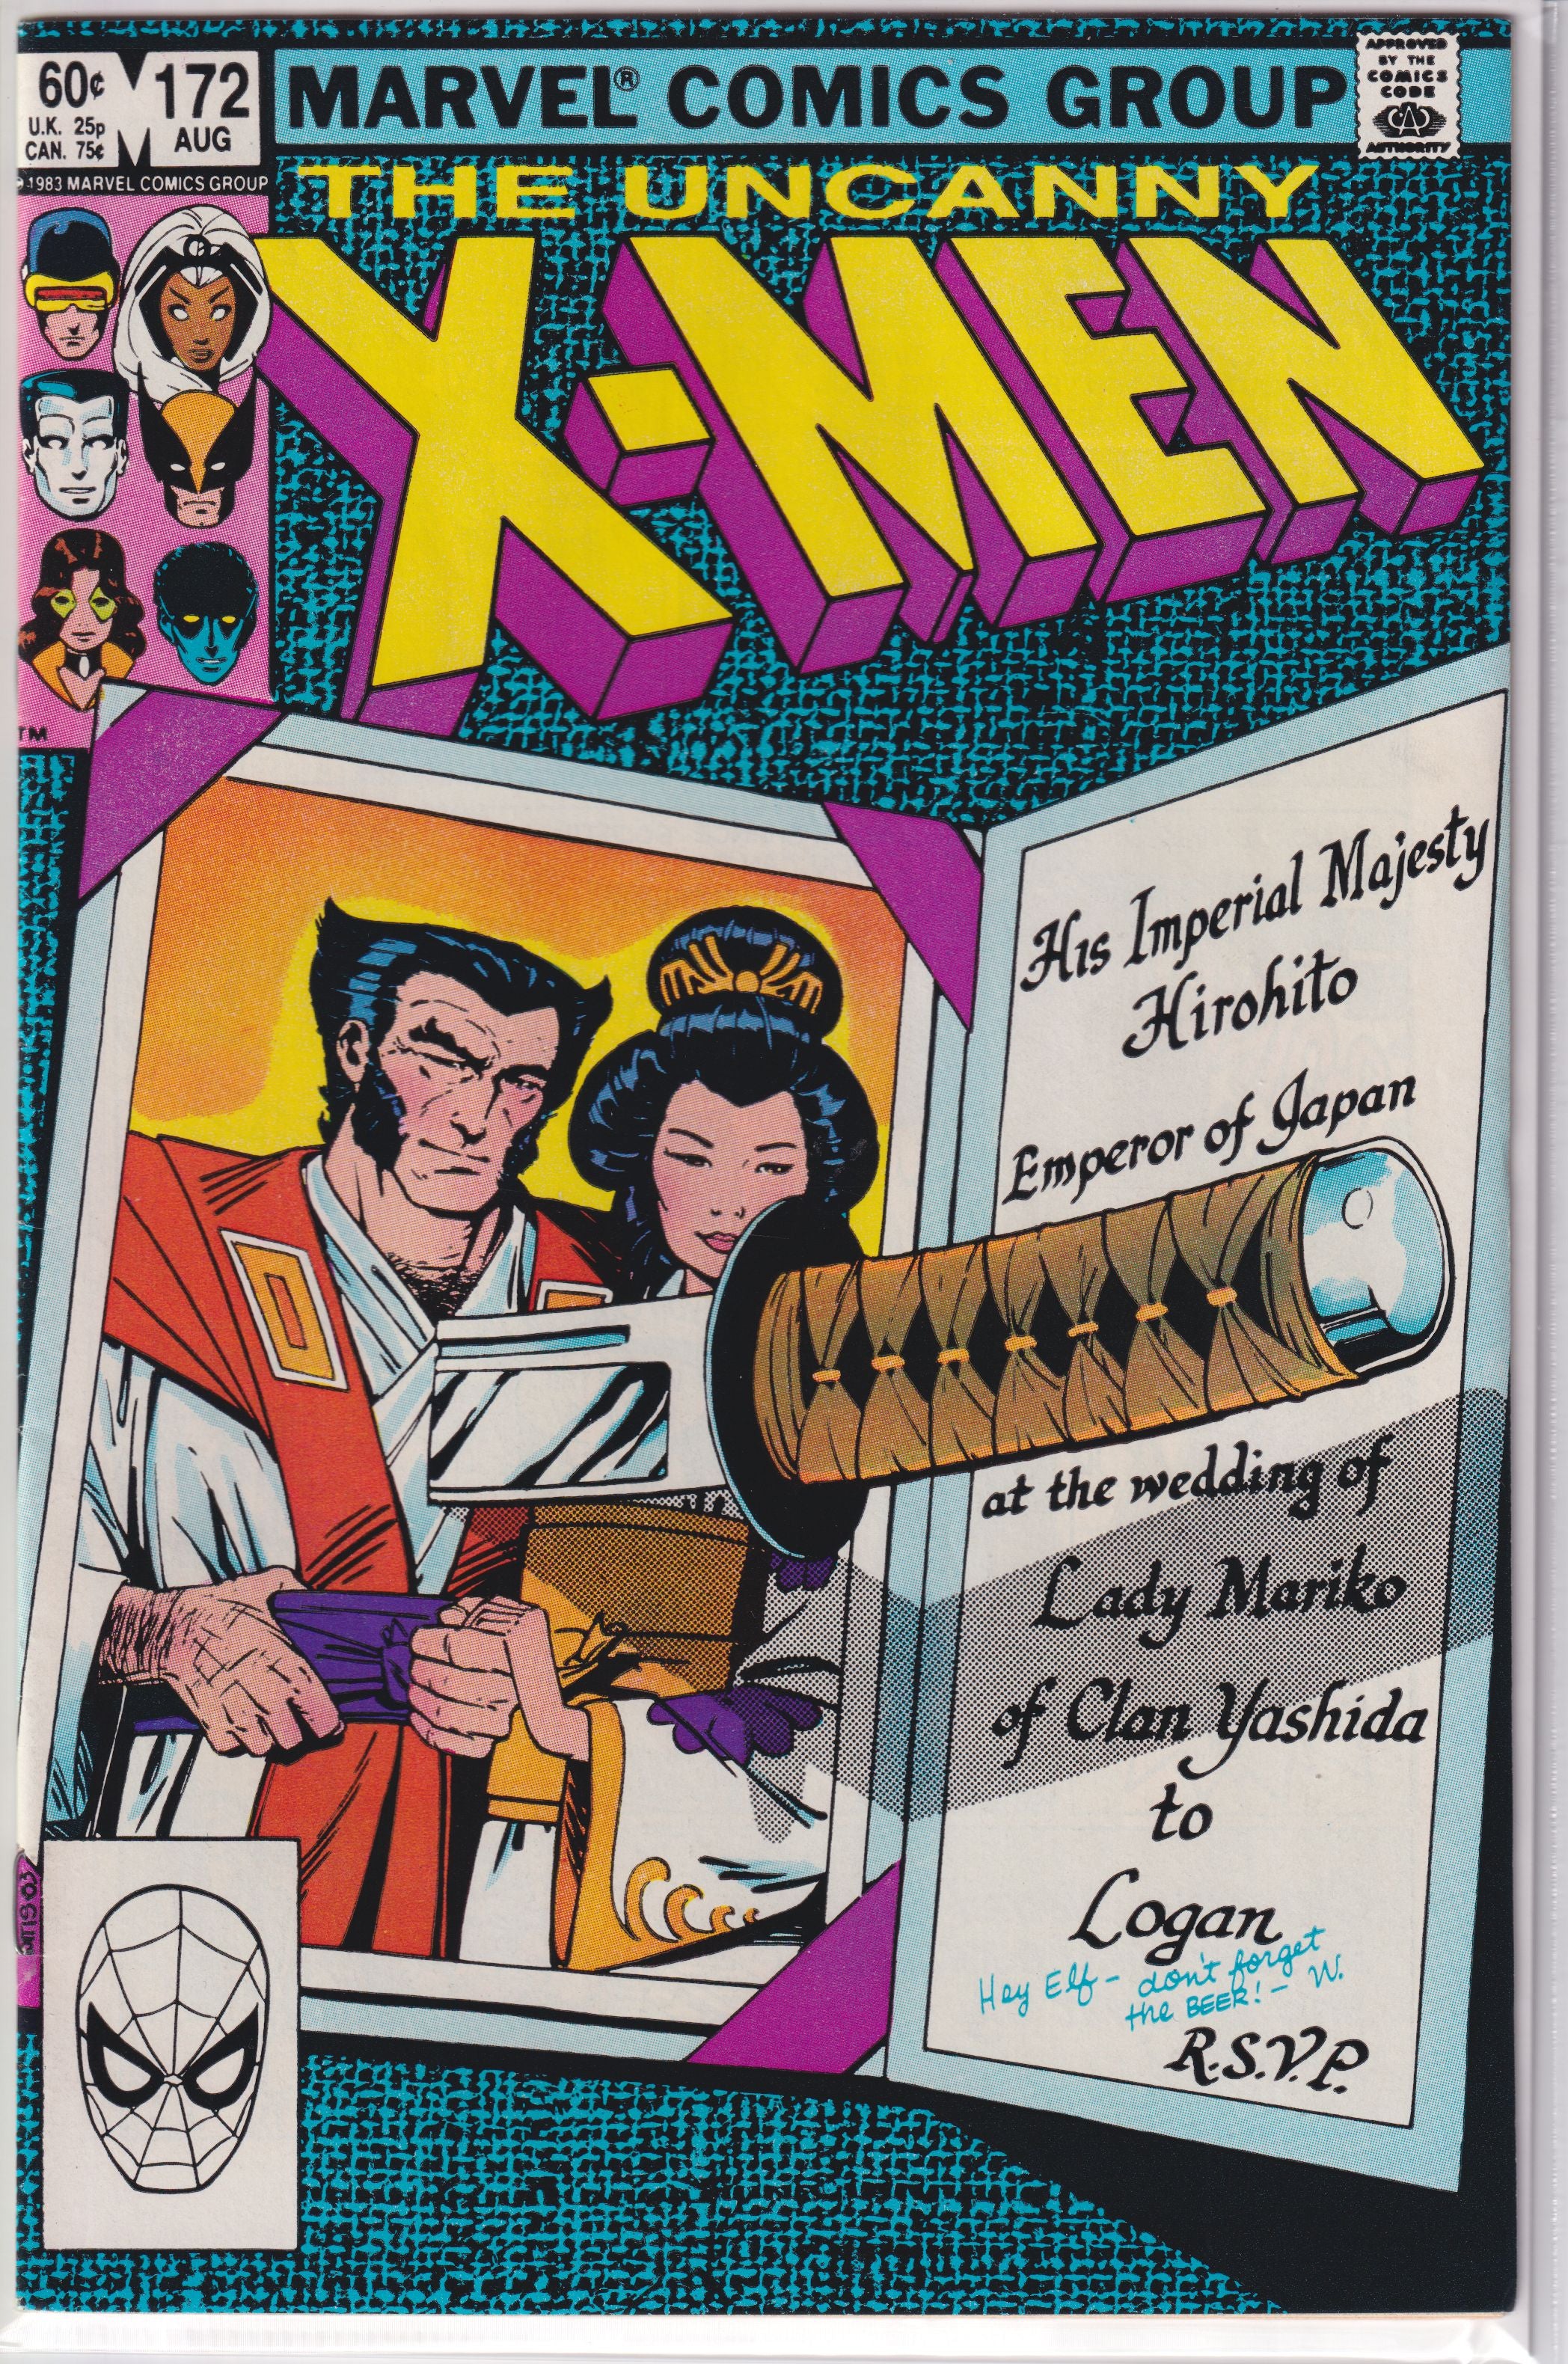 UNCANNY X-MEN (1981) #172 VF